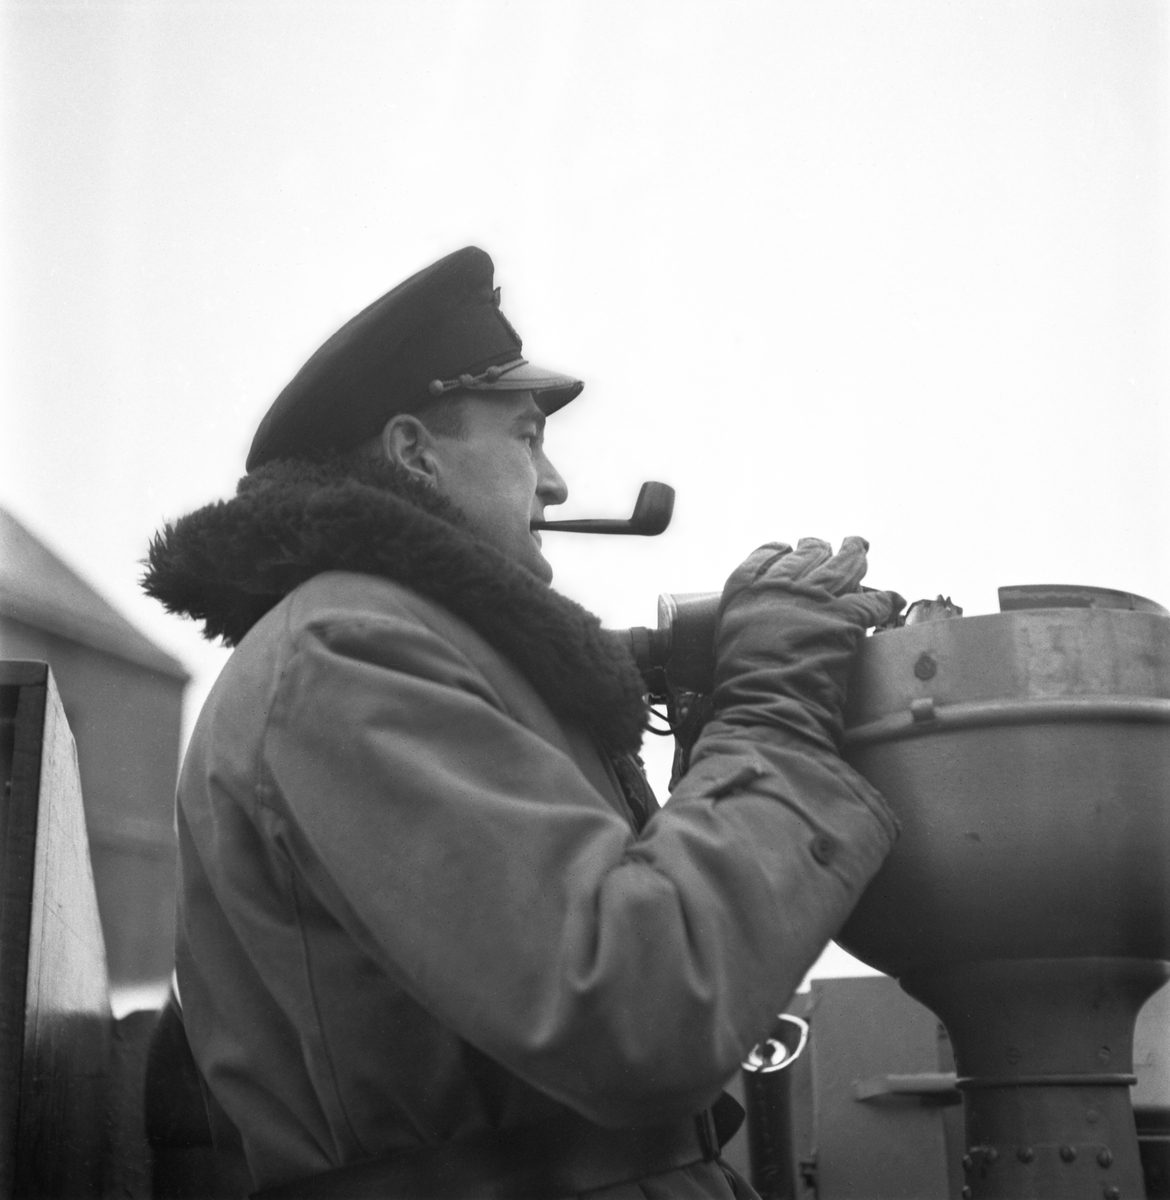 Kaptenen, Bengt Ohrelius Kungl. flottan, fartygschef på HMS Landsort.
Kapten Ohrelius är nu informationschef vid Statens Sjöhistoriska museum i Sthlm.